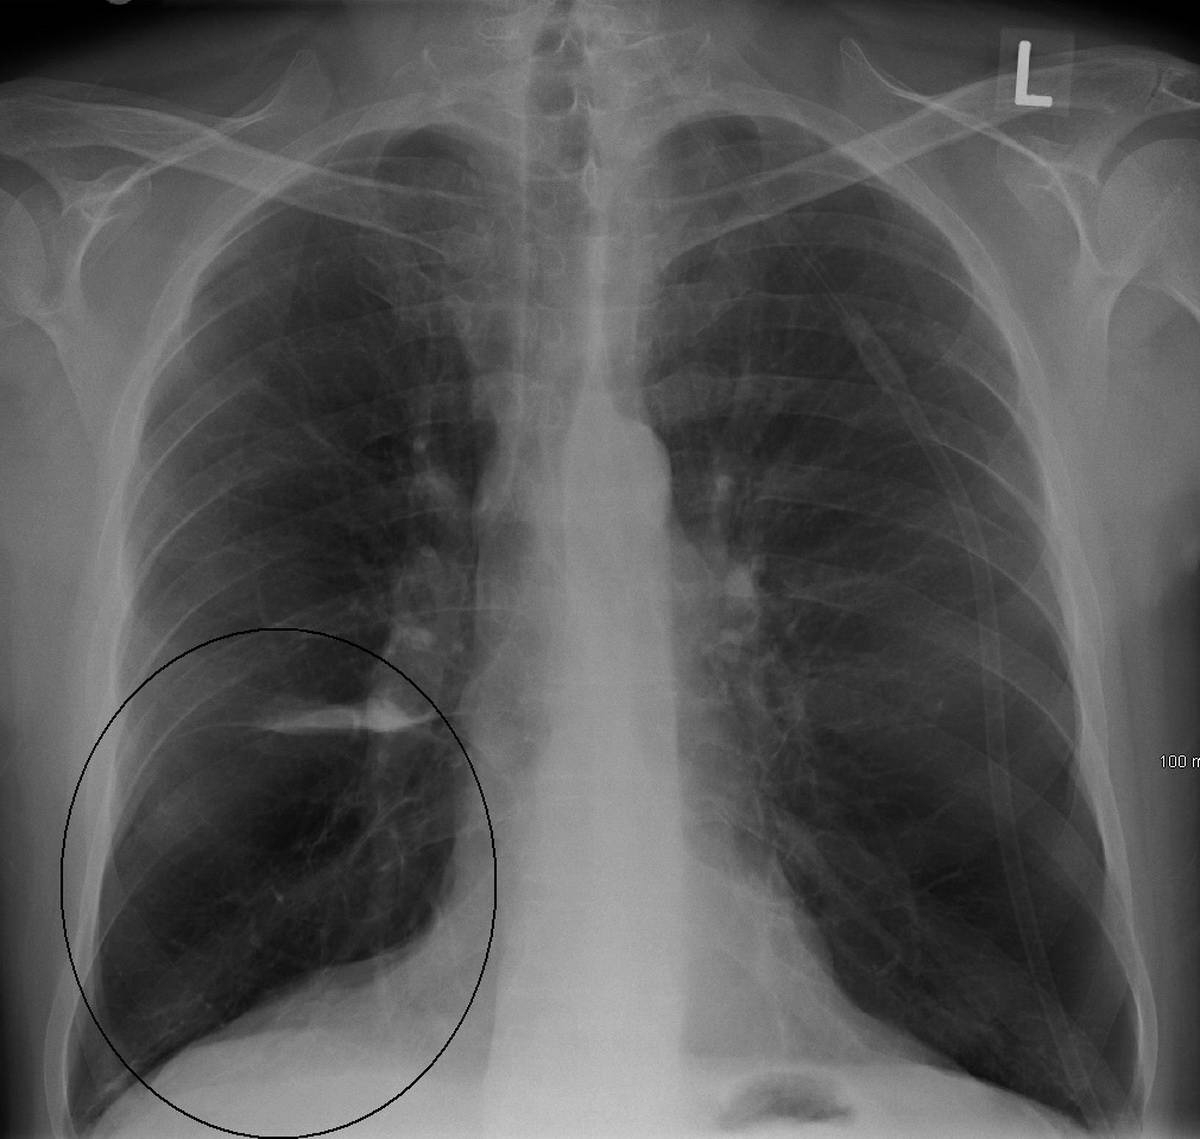 BullaCXR_Bildgröße ändern (c) Lung bulla as seen on CXR in a person with severe COPD associated with anti 1 antitrypsin deficiency.
(c) James Heilman, MD